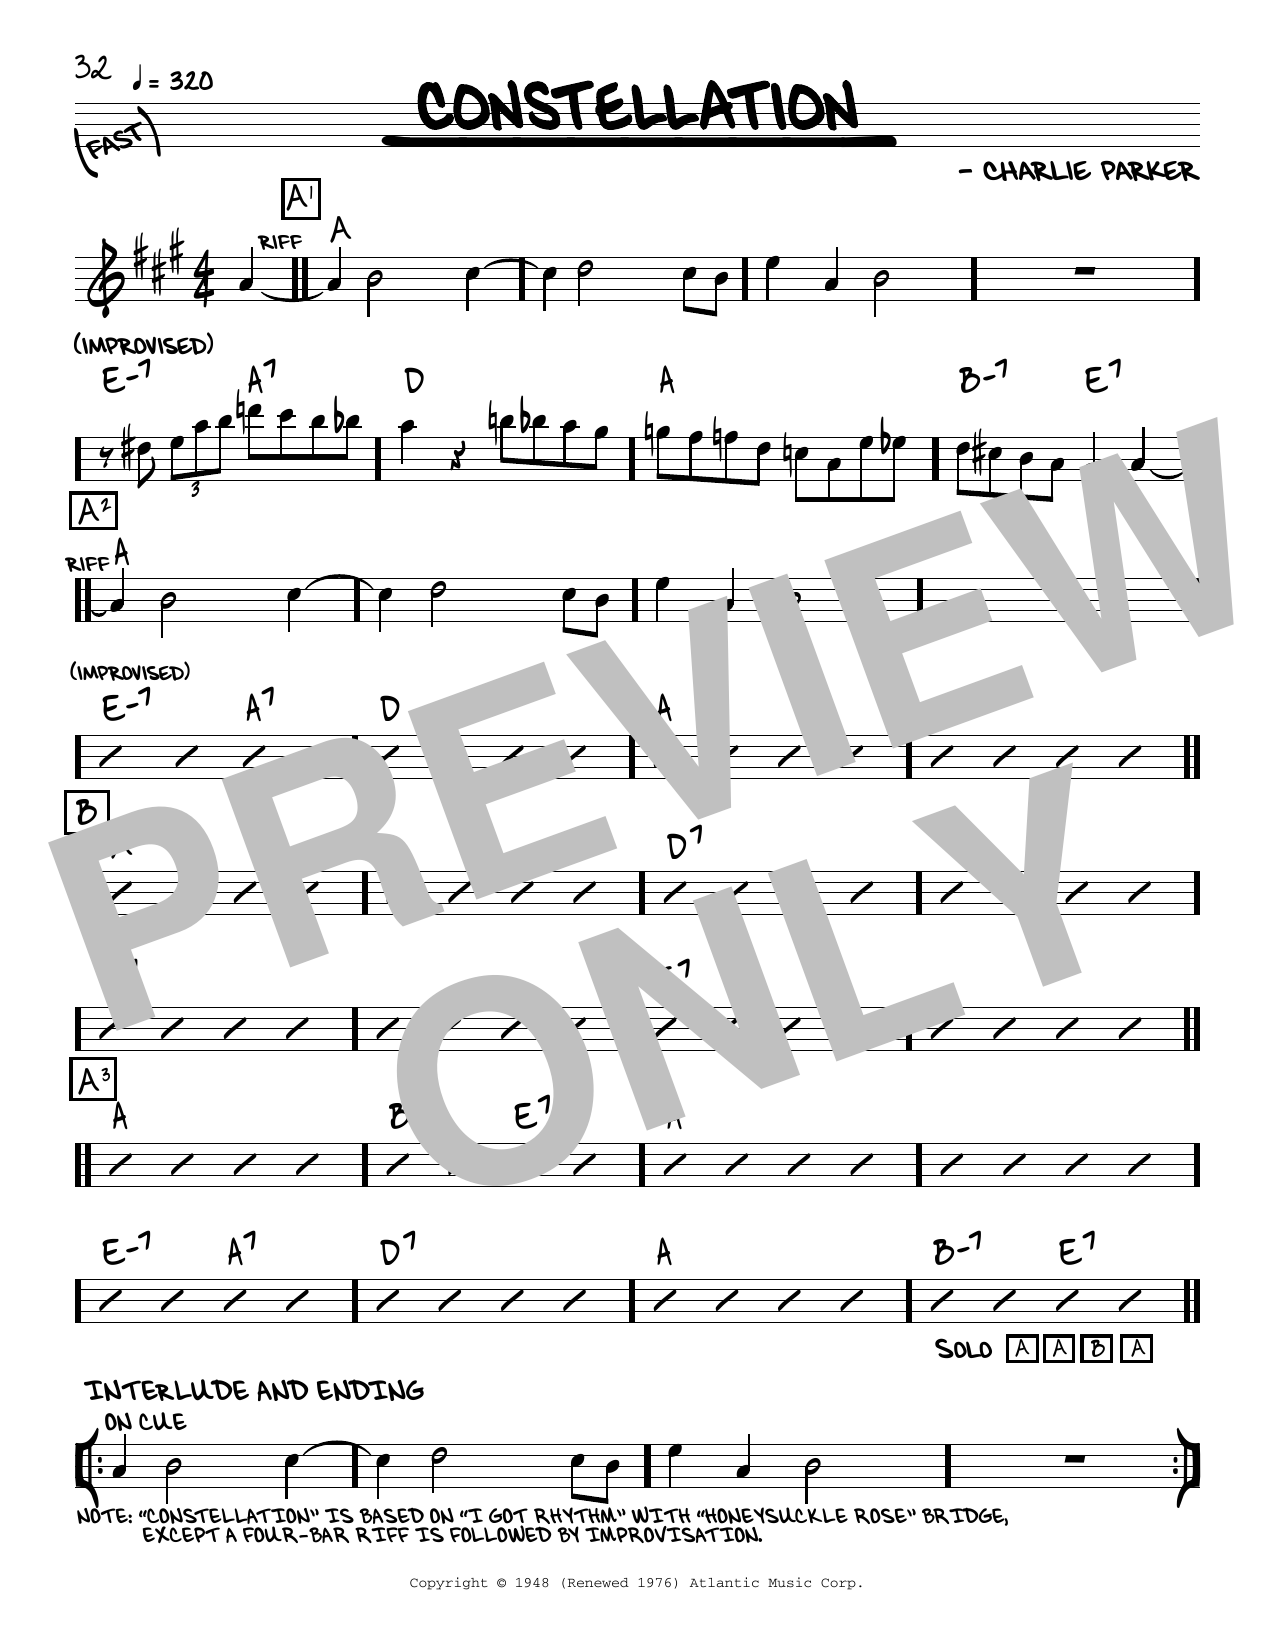 Download Charlie Parker Constellation Sheet Music